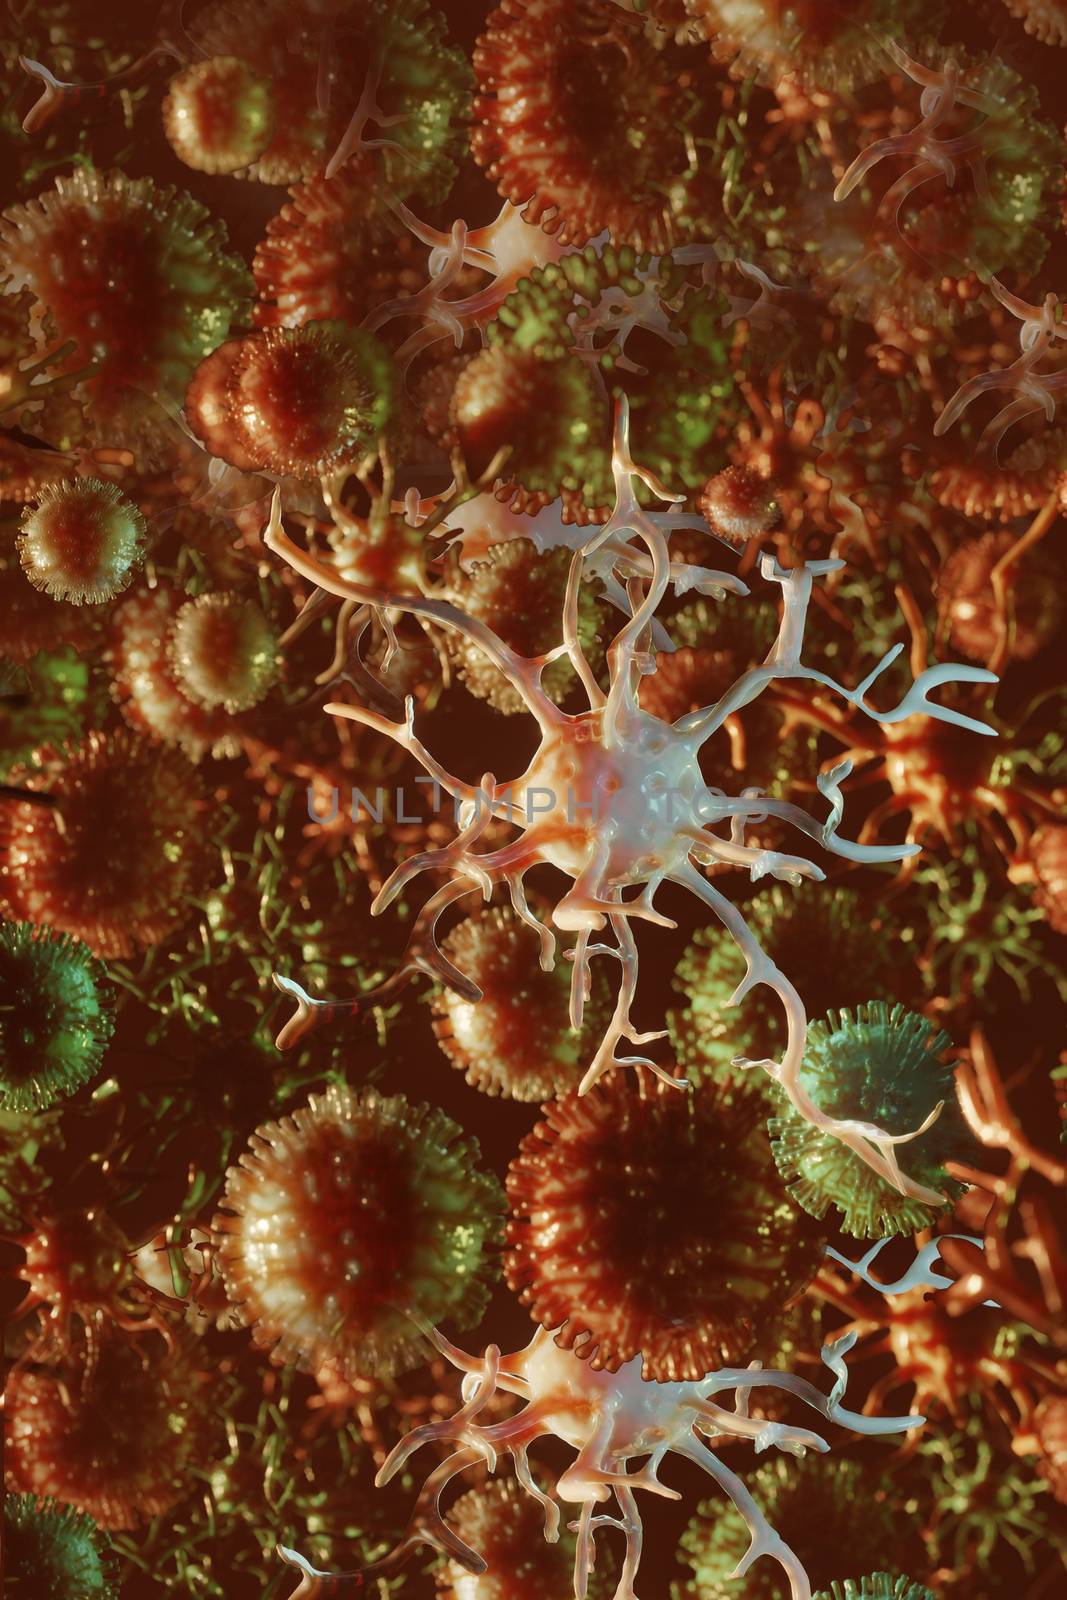 Virus or coronavirus bacteria cell in close up. 3D render image of global health crisis